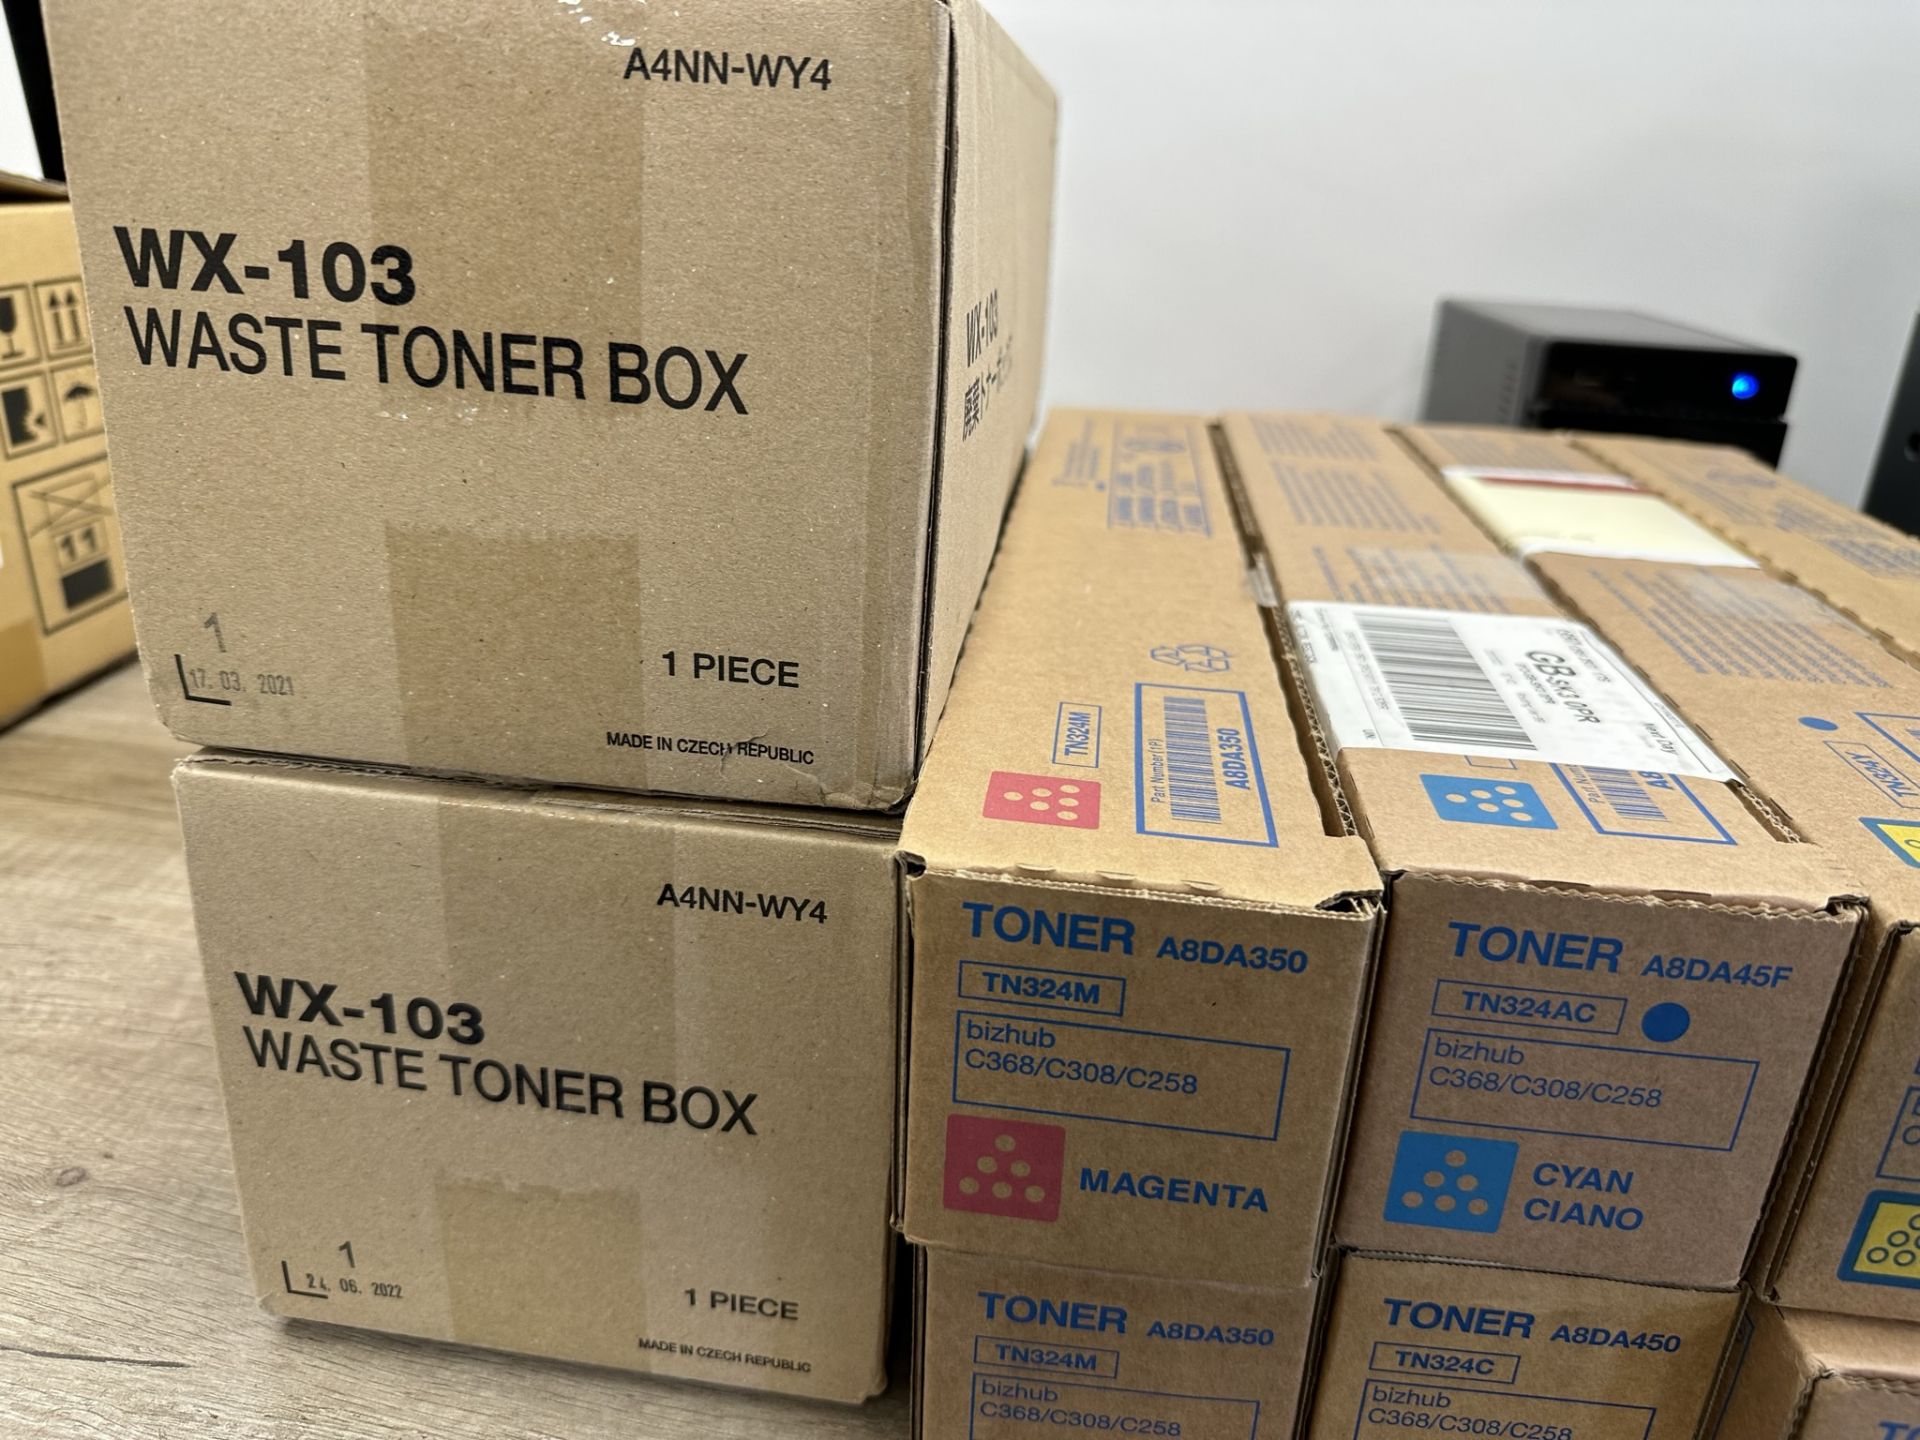 8 x Konica Minolta Toner Cartridges w/ 2 x Waste Toner Boxes - Image 3 of 4